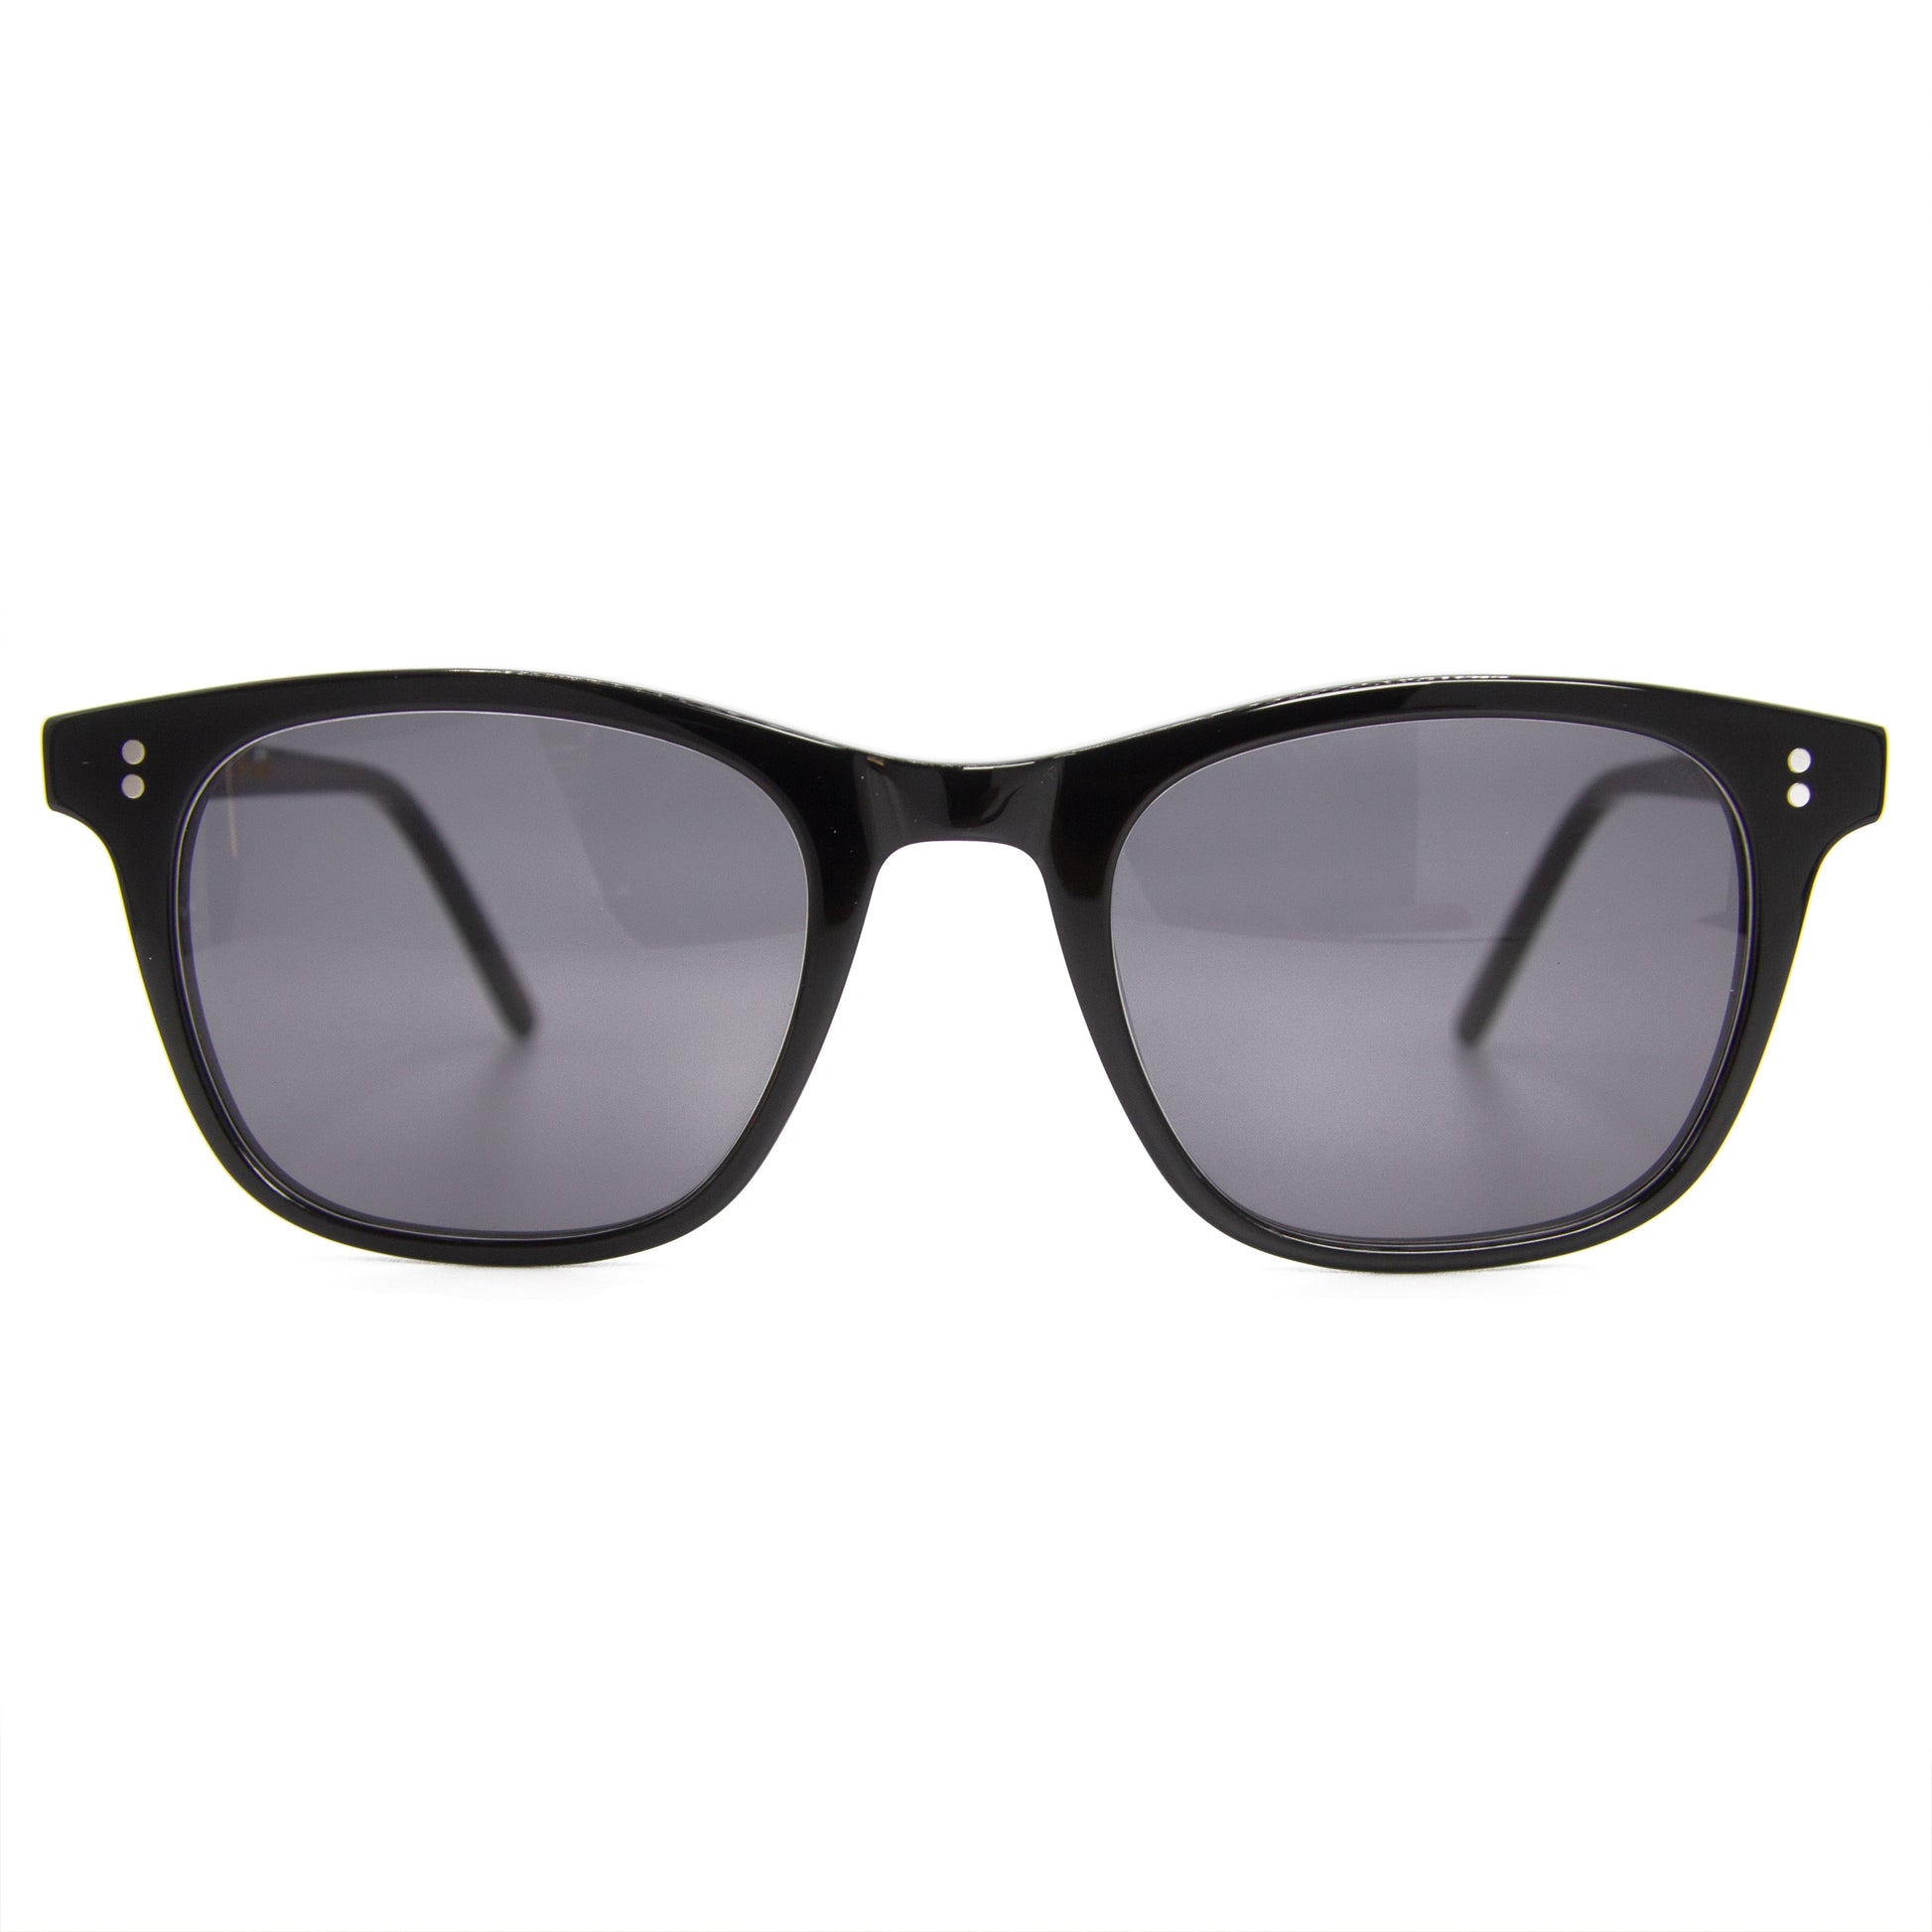 Soft Square Gloss Black Sunglasses